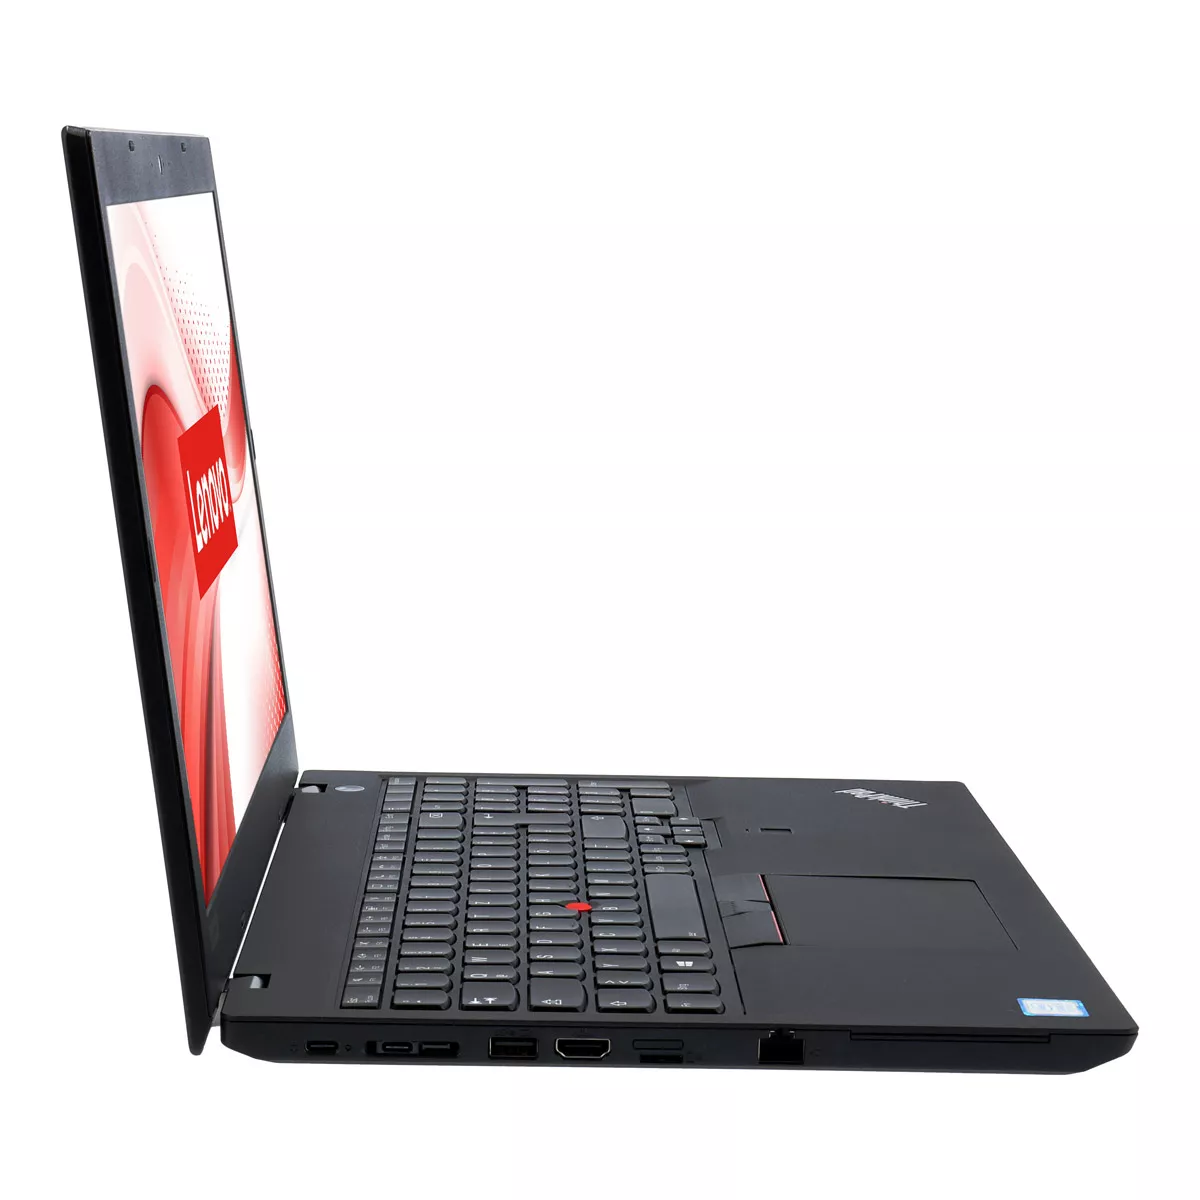 Lenovo ThinkPad L580 Core i5 8250U Full-HD 16 GB 500 GB M.2 nVME SSD Webcam A